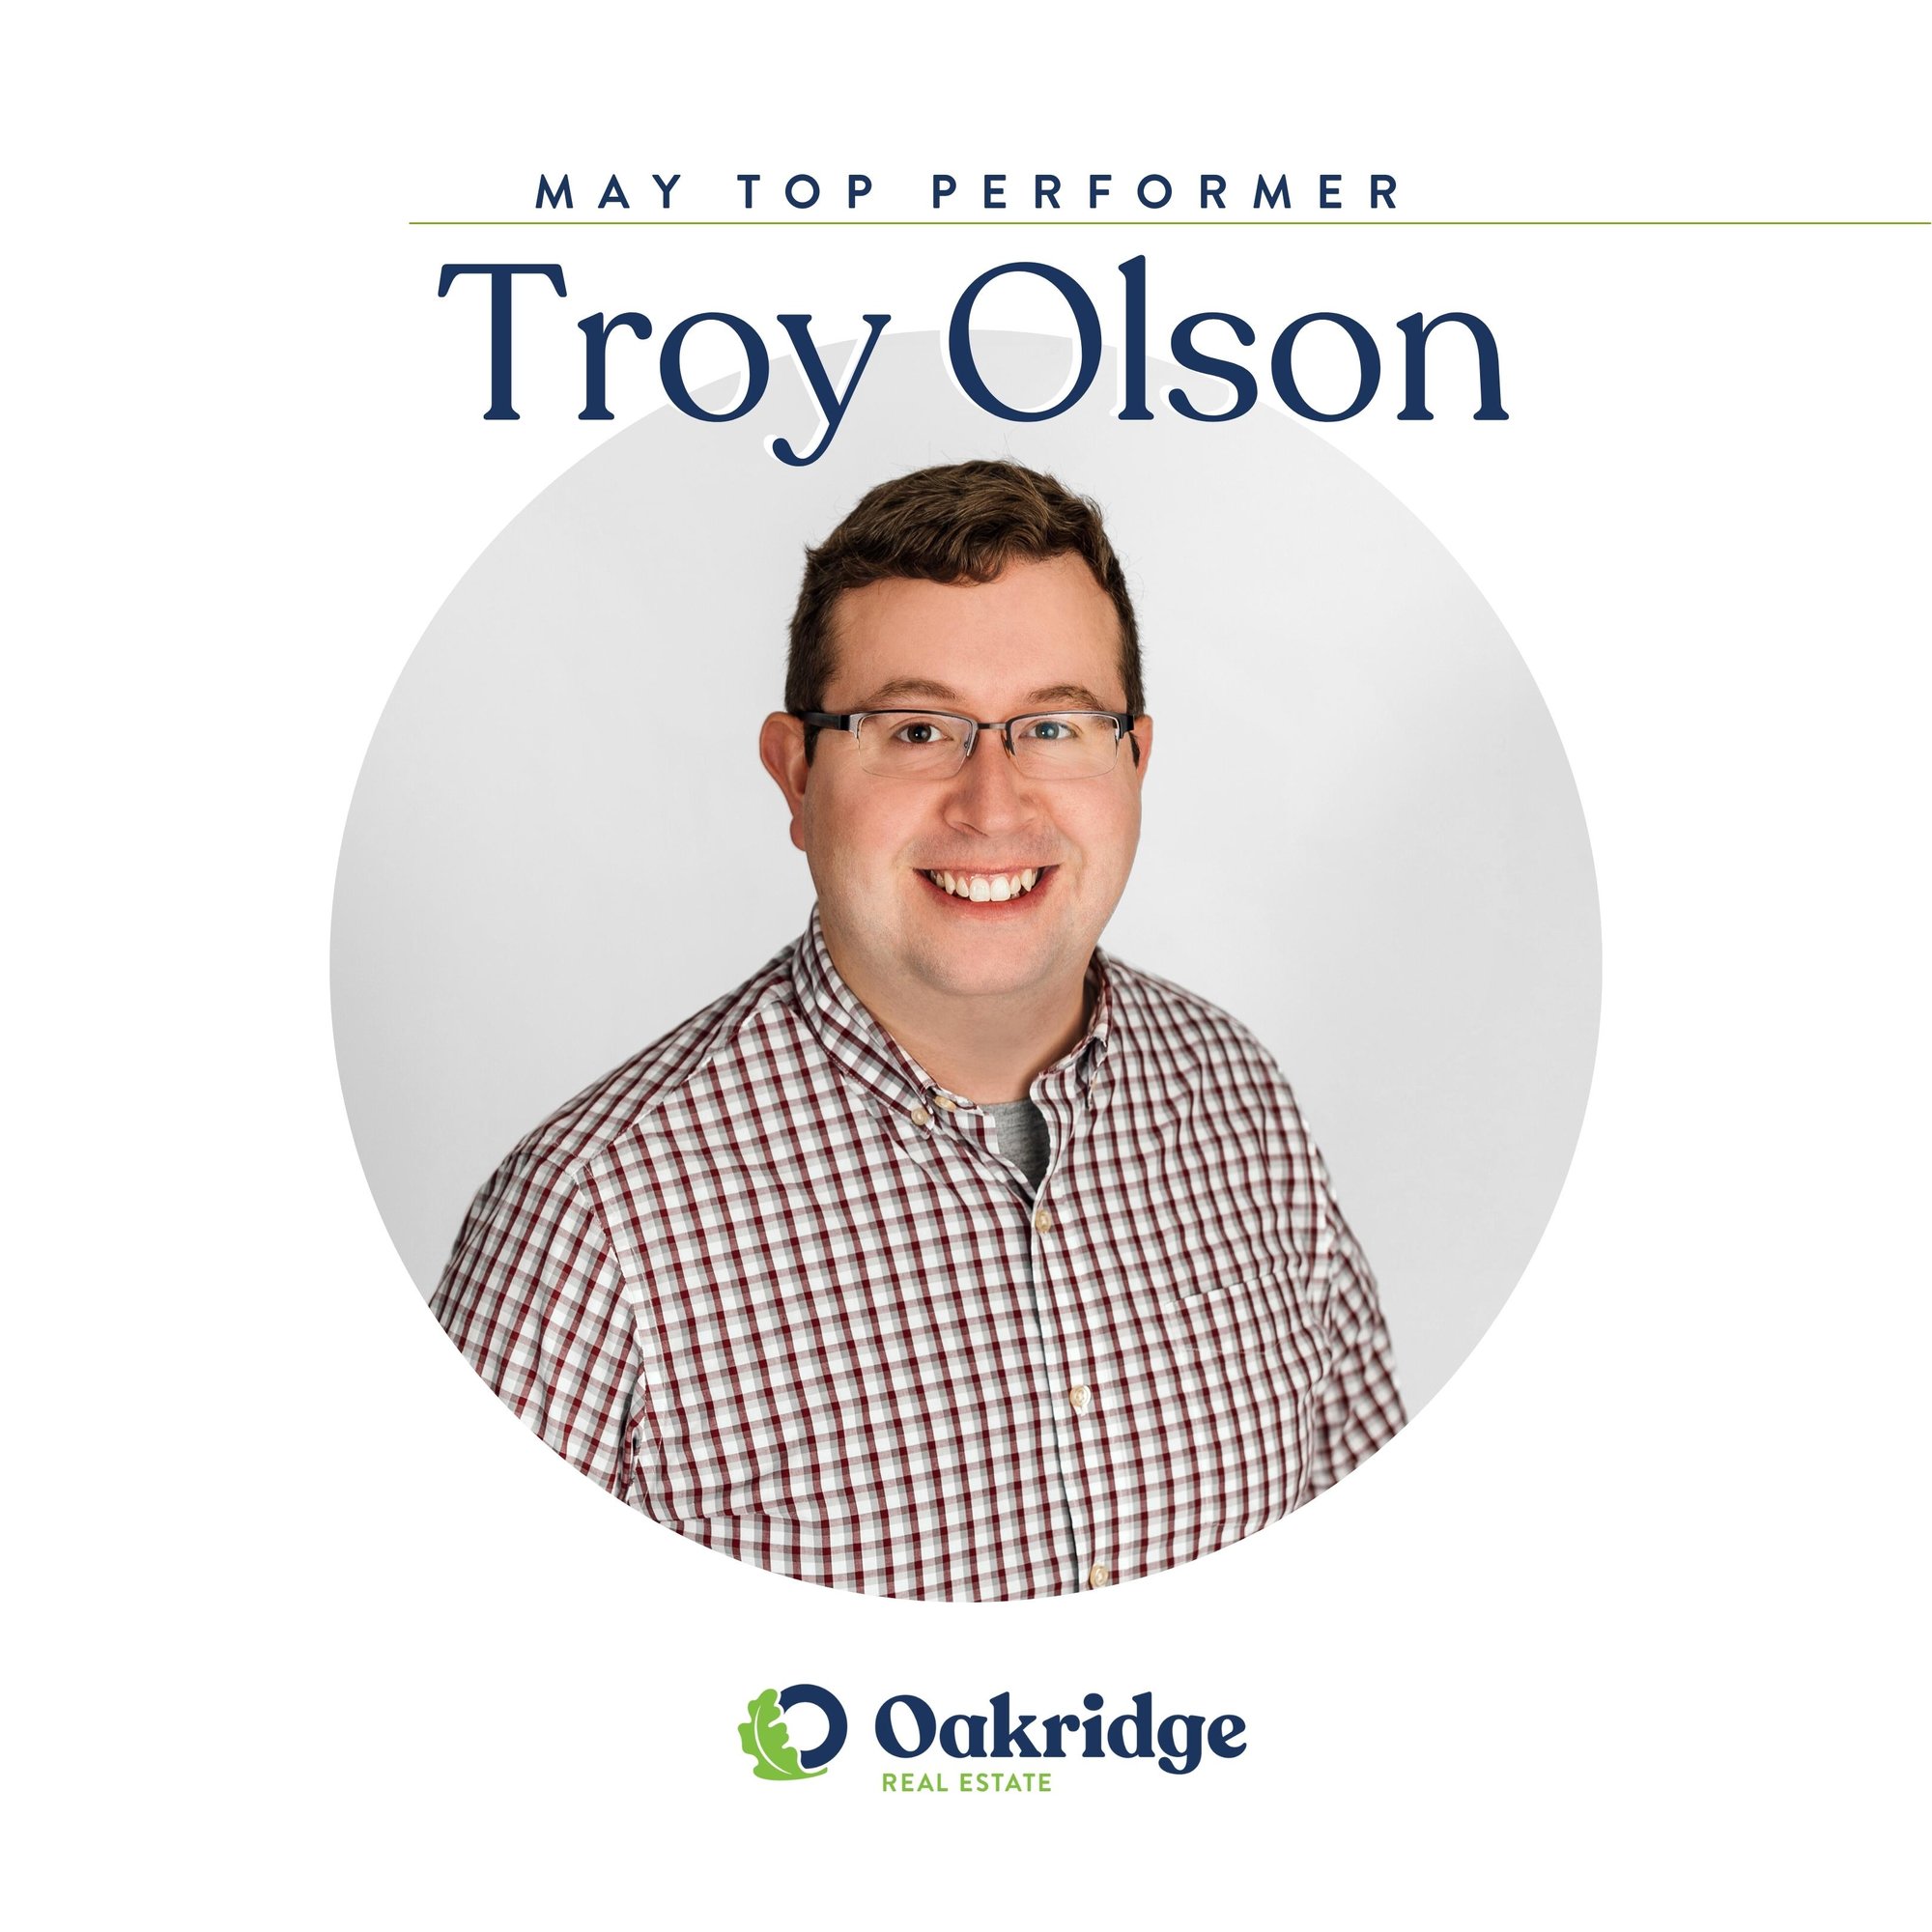 Troy Olson May Top Performer Oakridge Real Estate